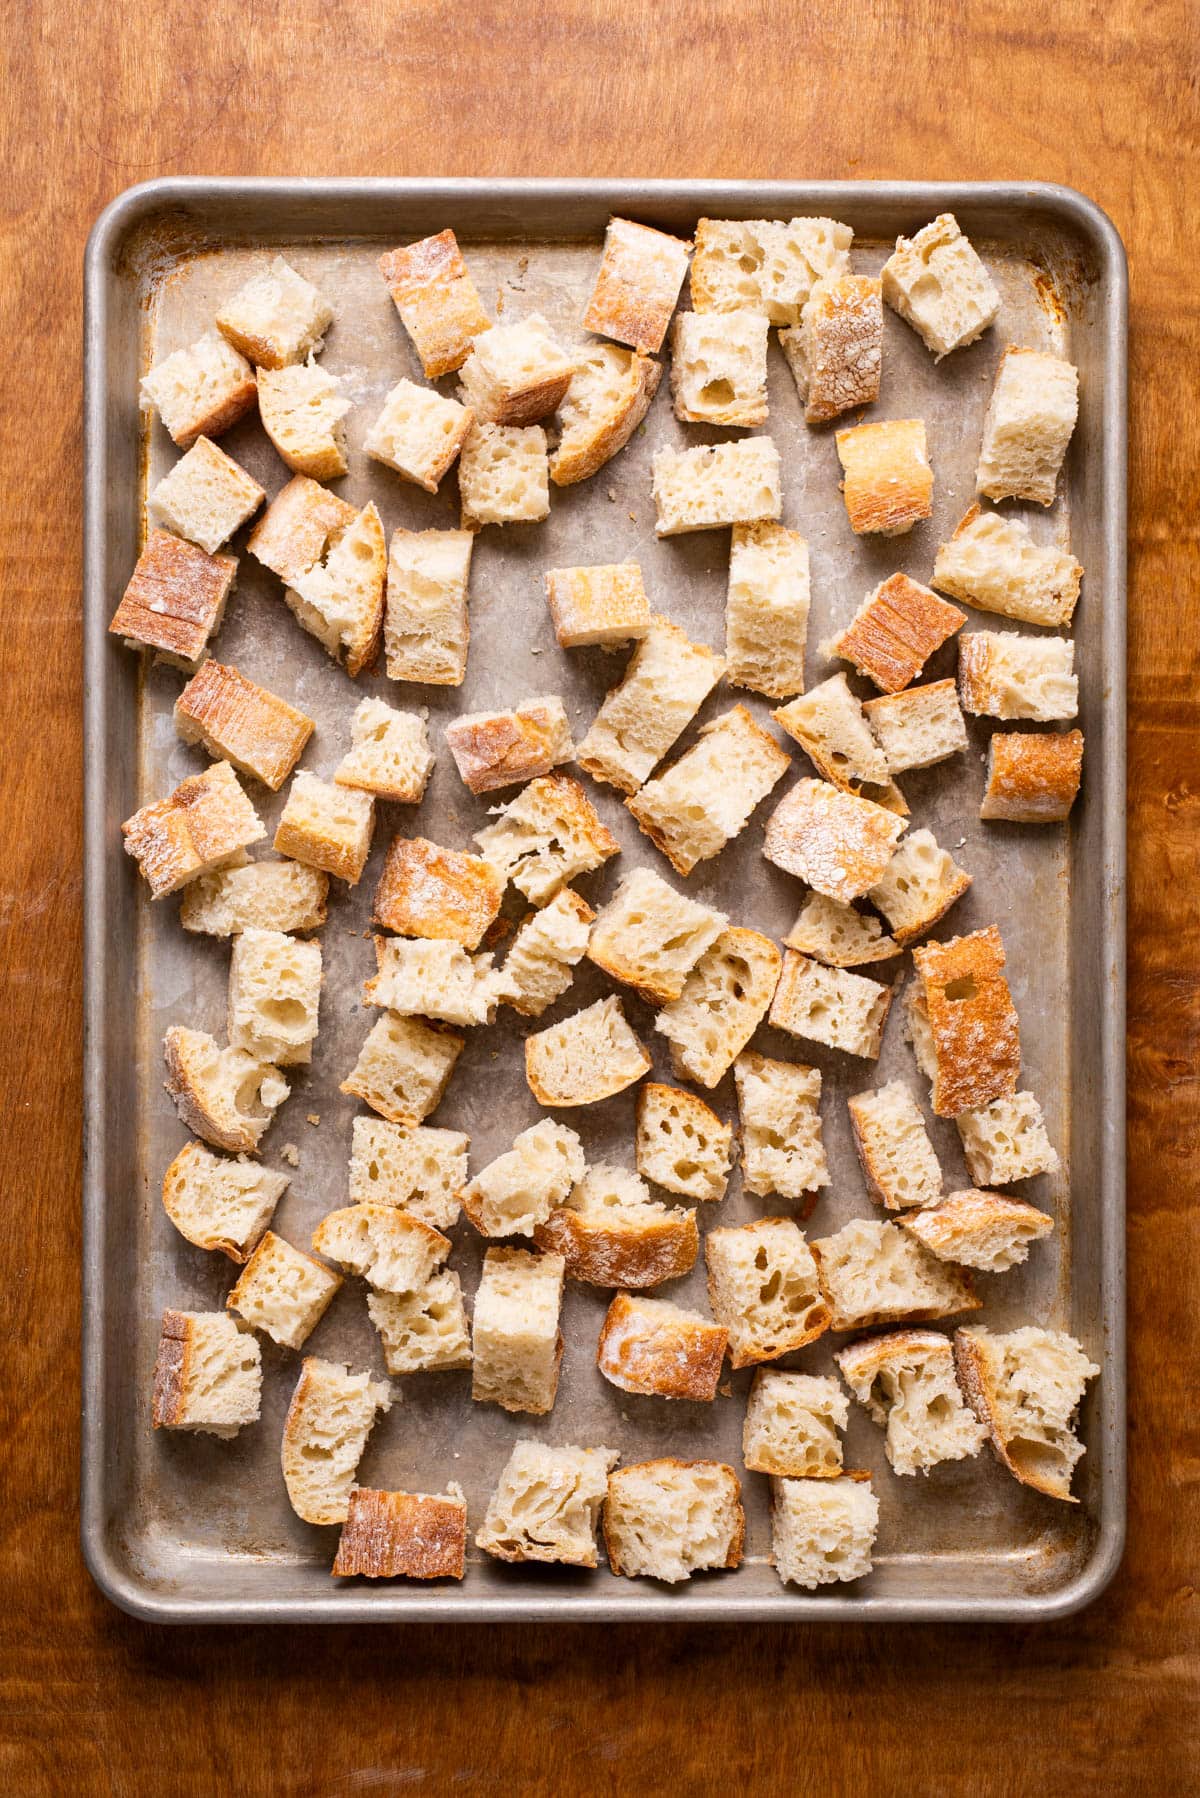 Ciabatta bread cubes on a baking sheet.